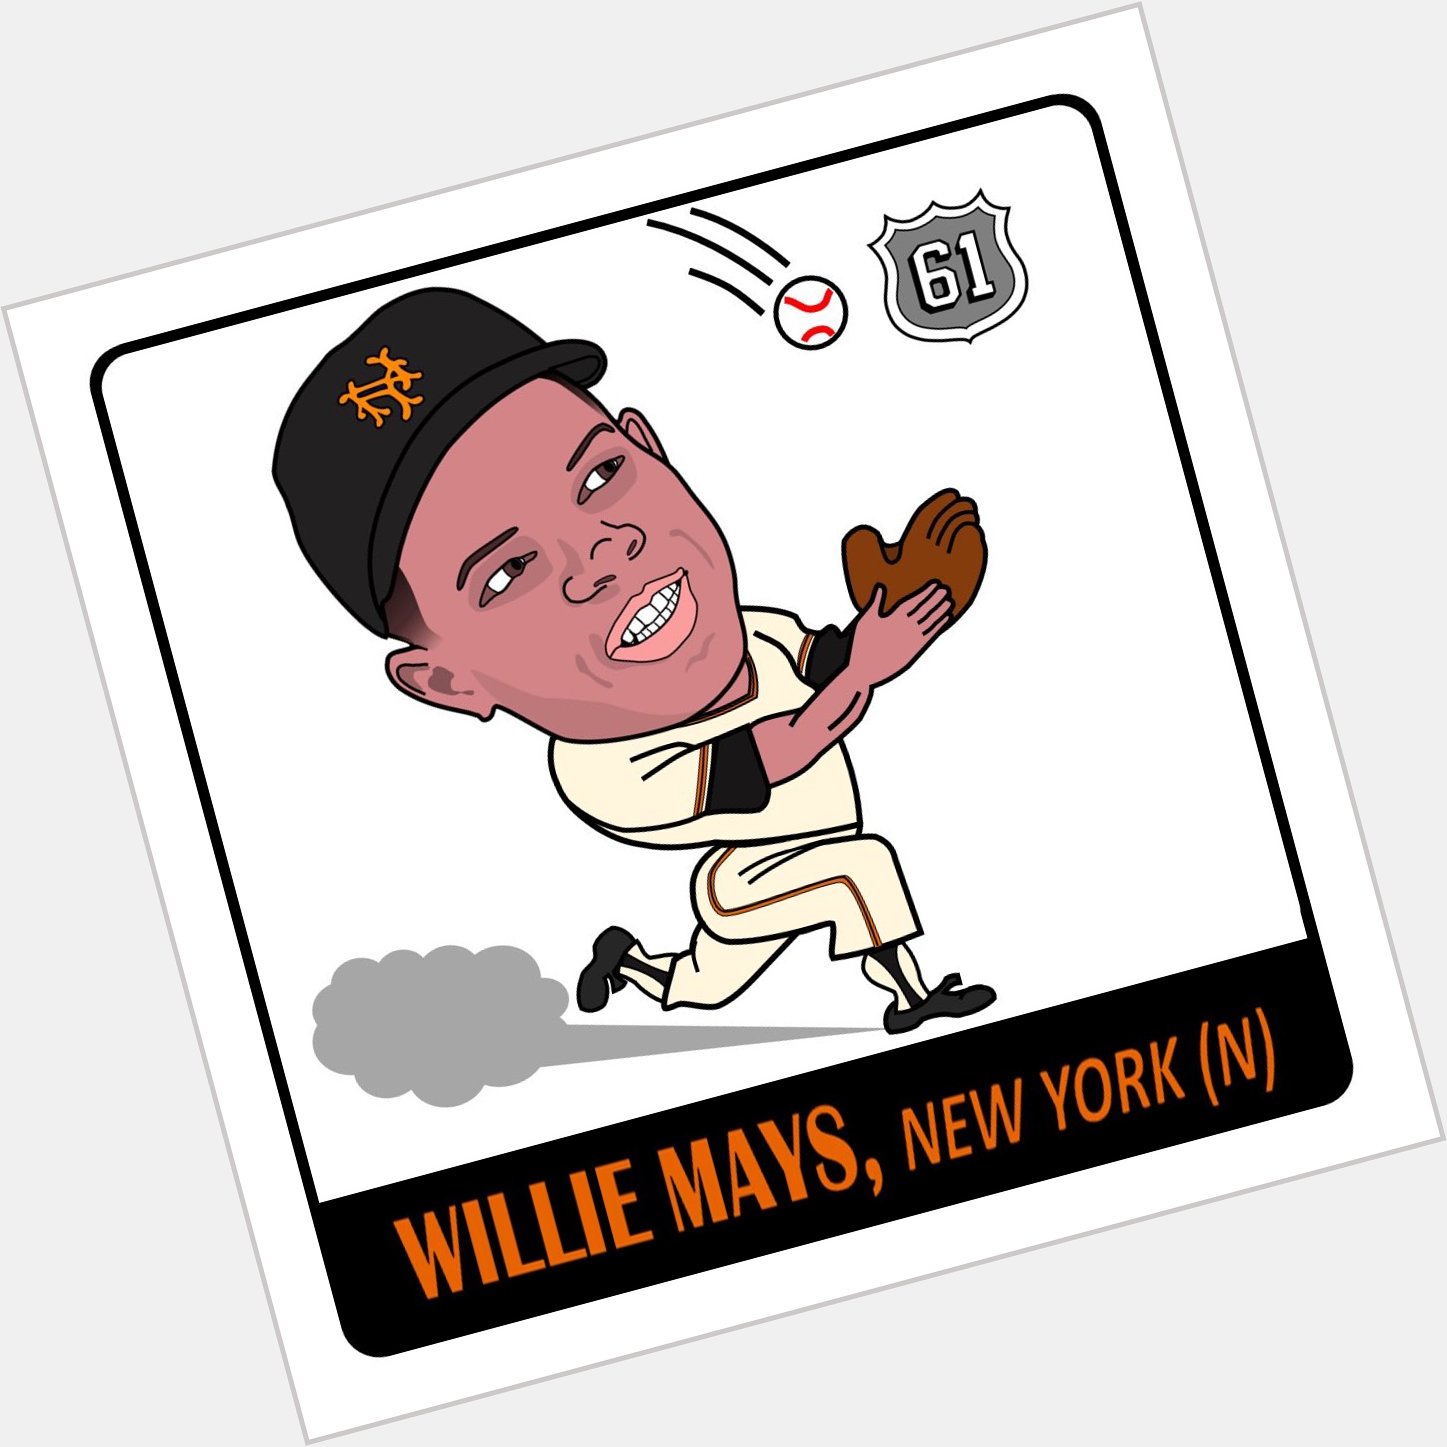 Happy Birthday to Willie Mays! 